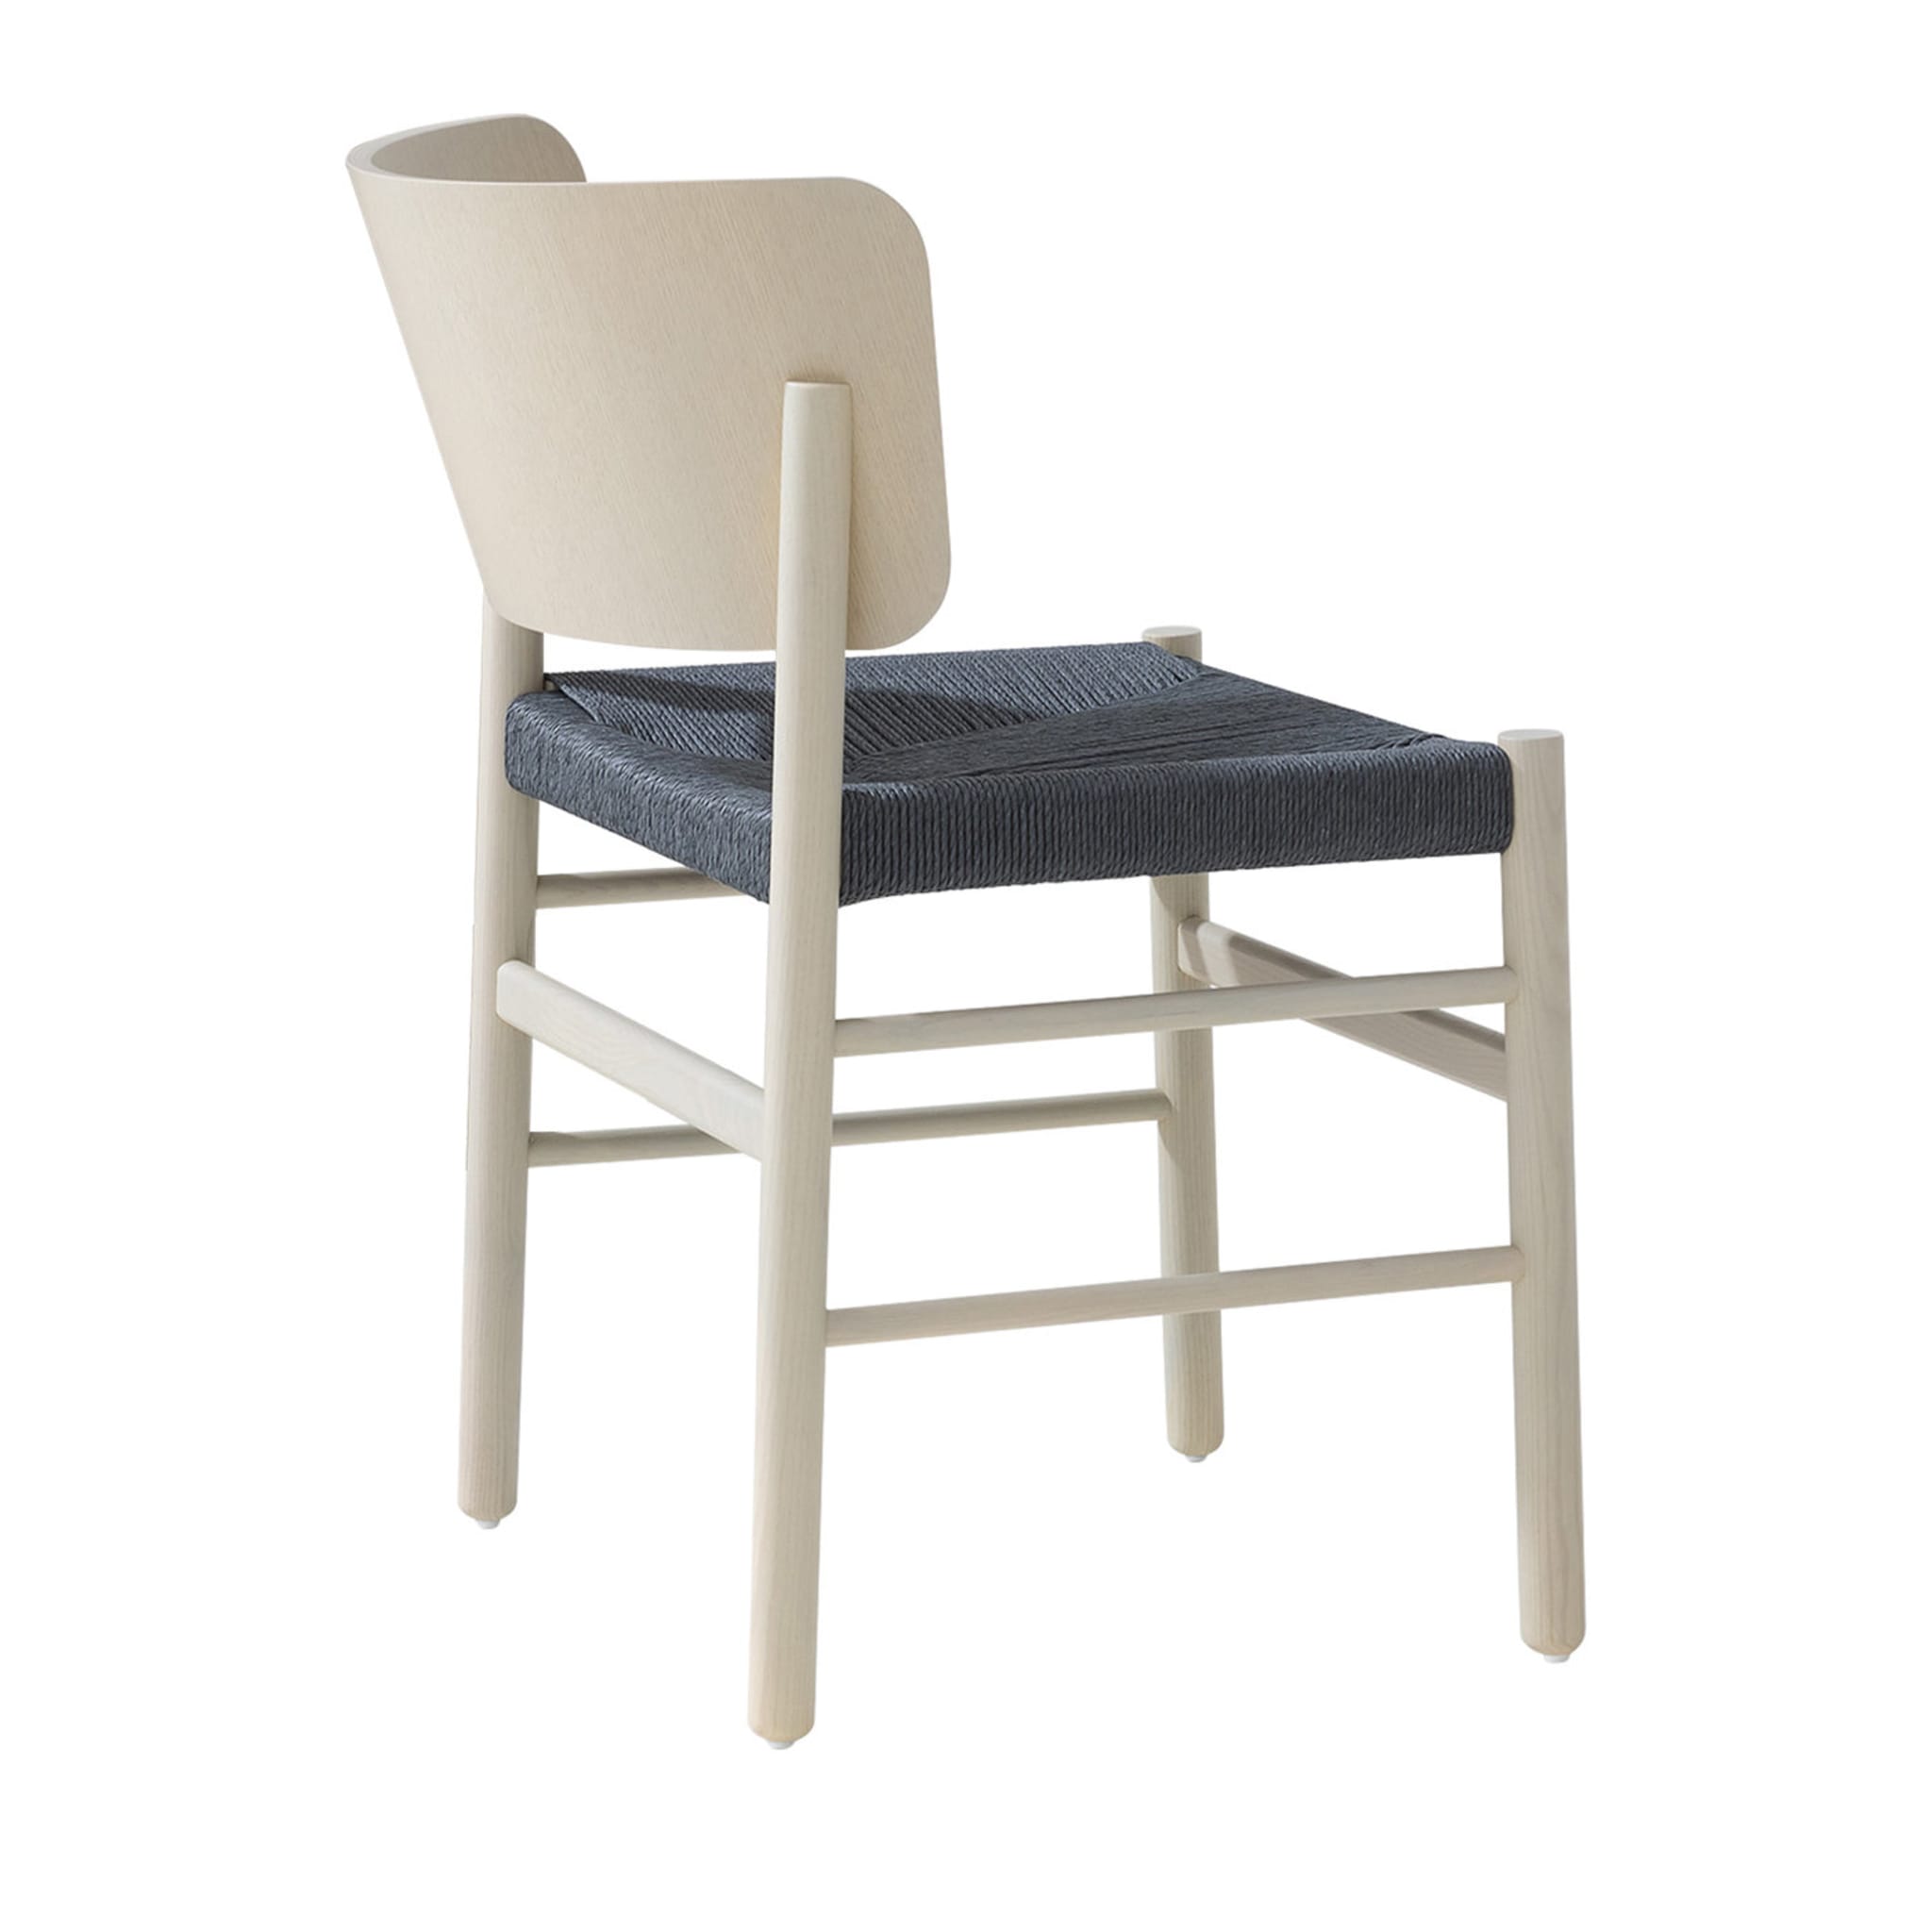 Fratina 680 Gray Chair by Emilio Nanni - Main view